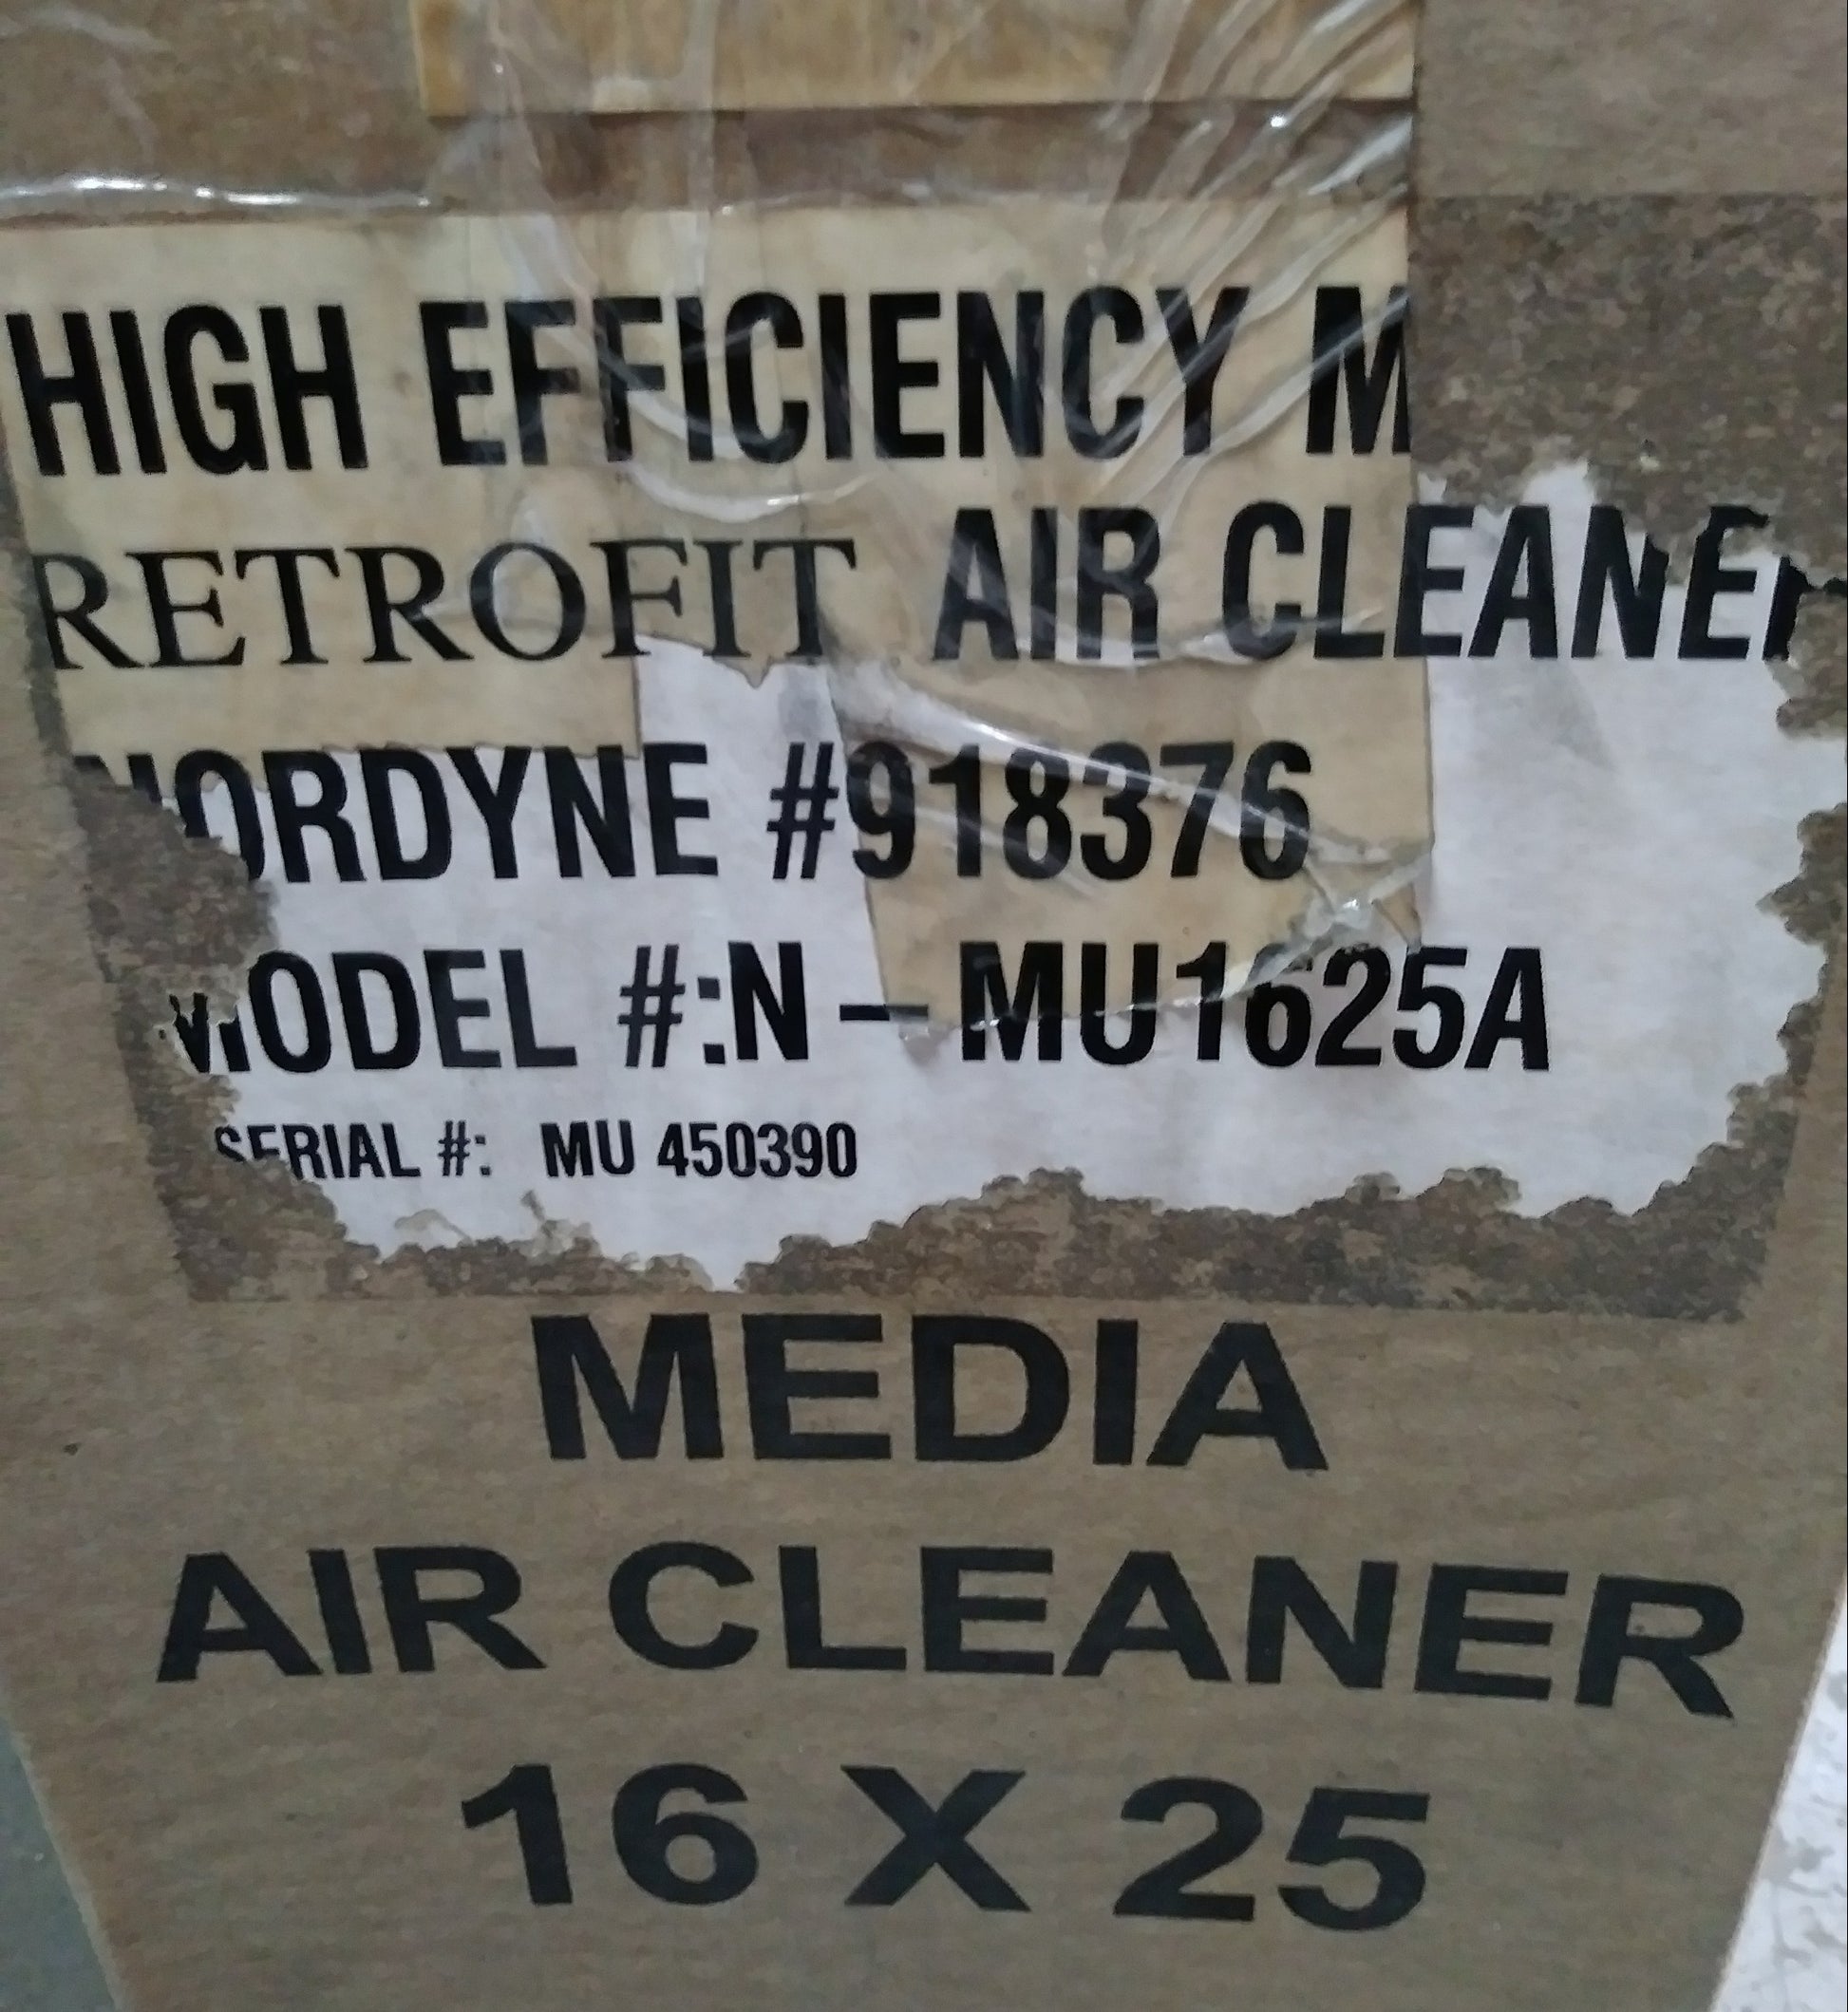 13-5/8" X 24-1/8" HIGH EFFICIENCY RETROFIT MEDIA AIR CLEANER FOR AIR HANDLER